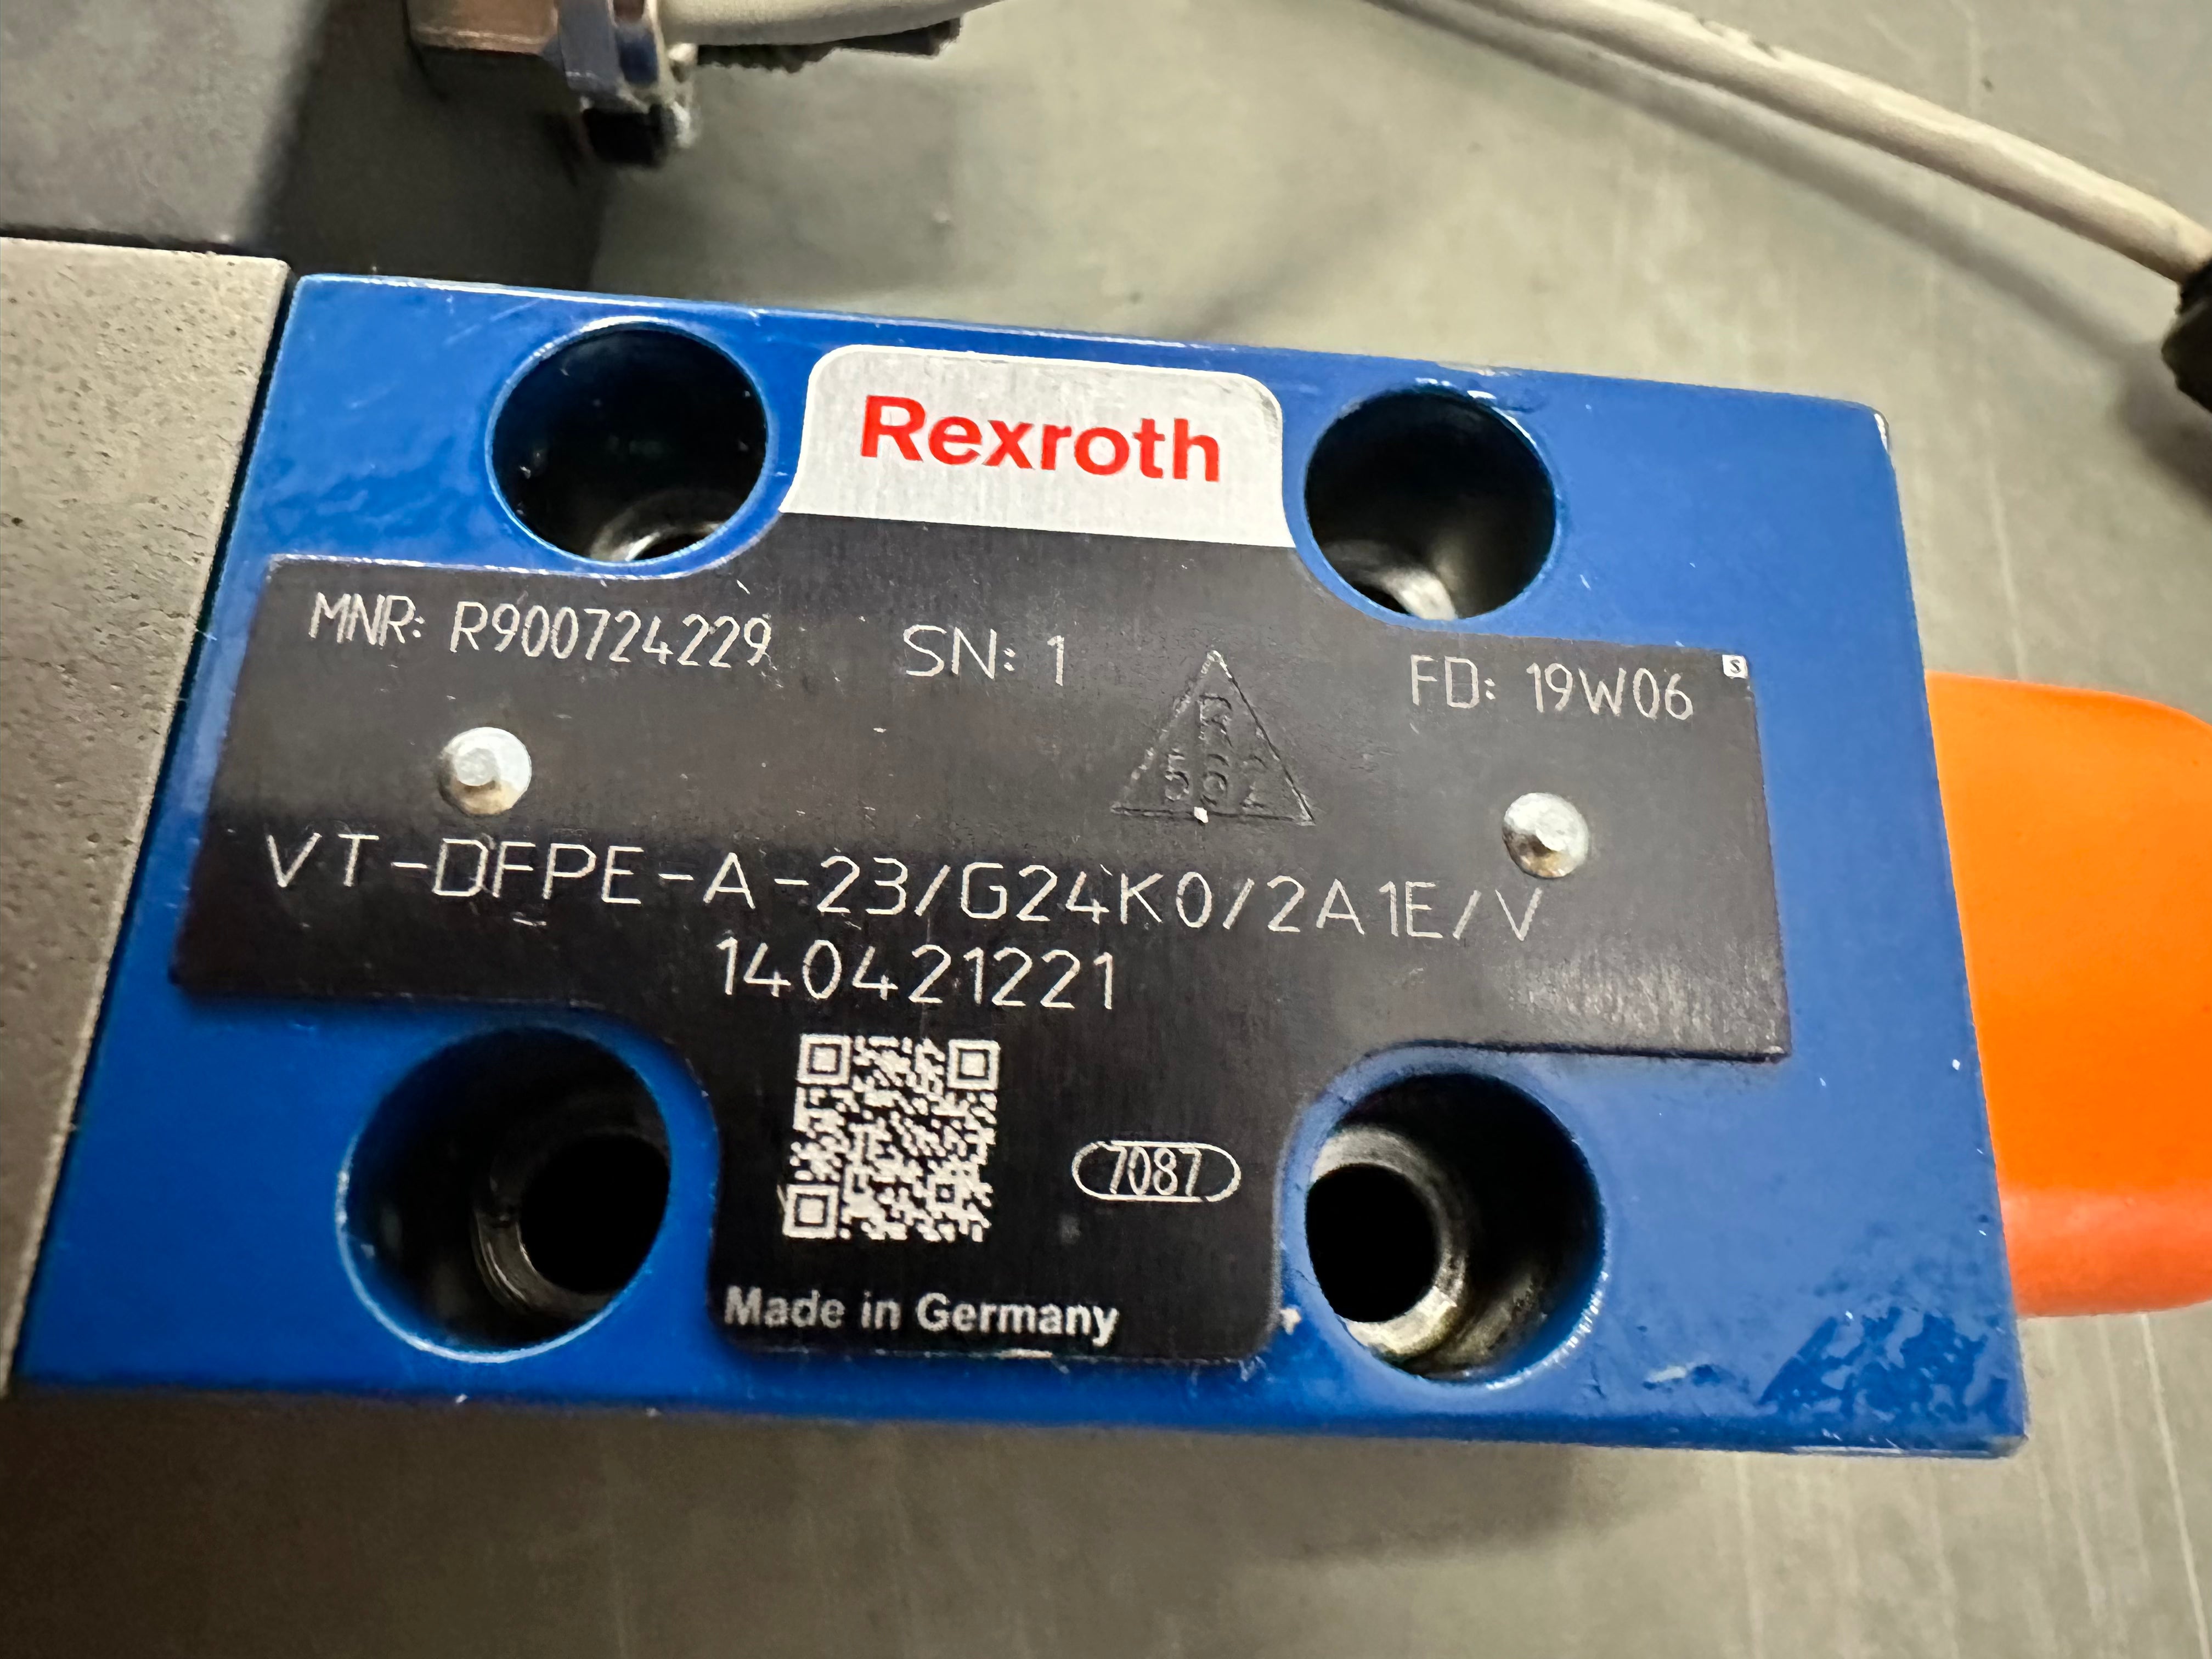 Bosch / Rexroth R900752706 Système de régulation SY2DFEE-2X